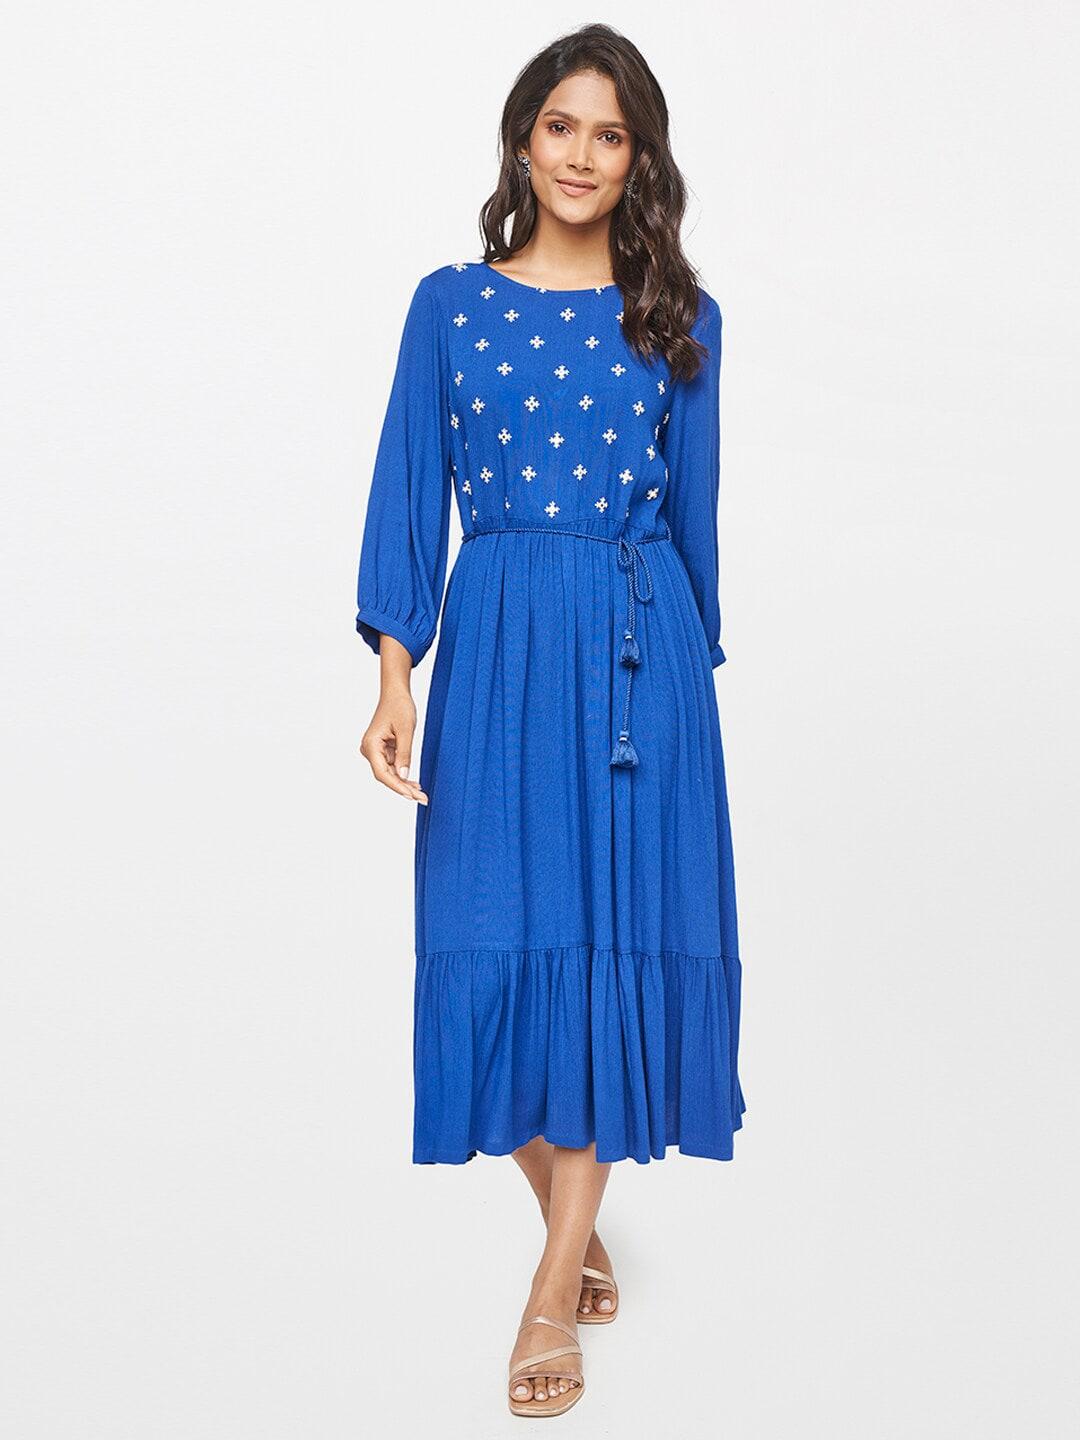 itse-blue-a-line-dress